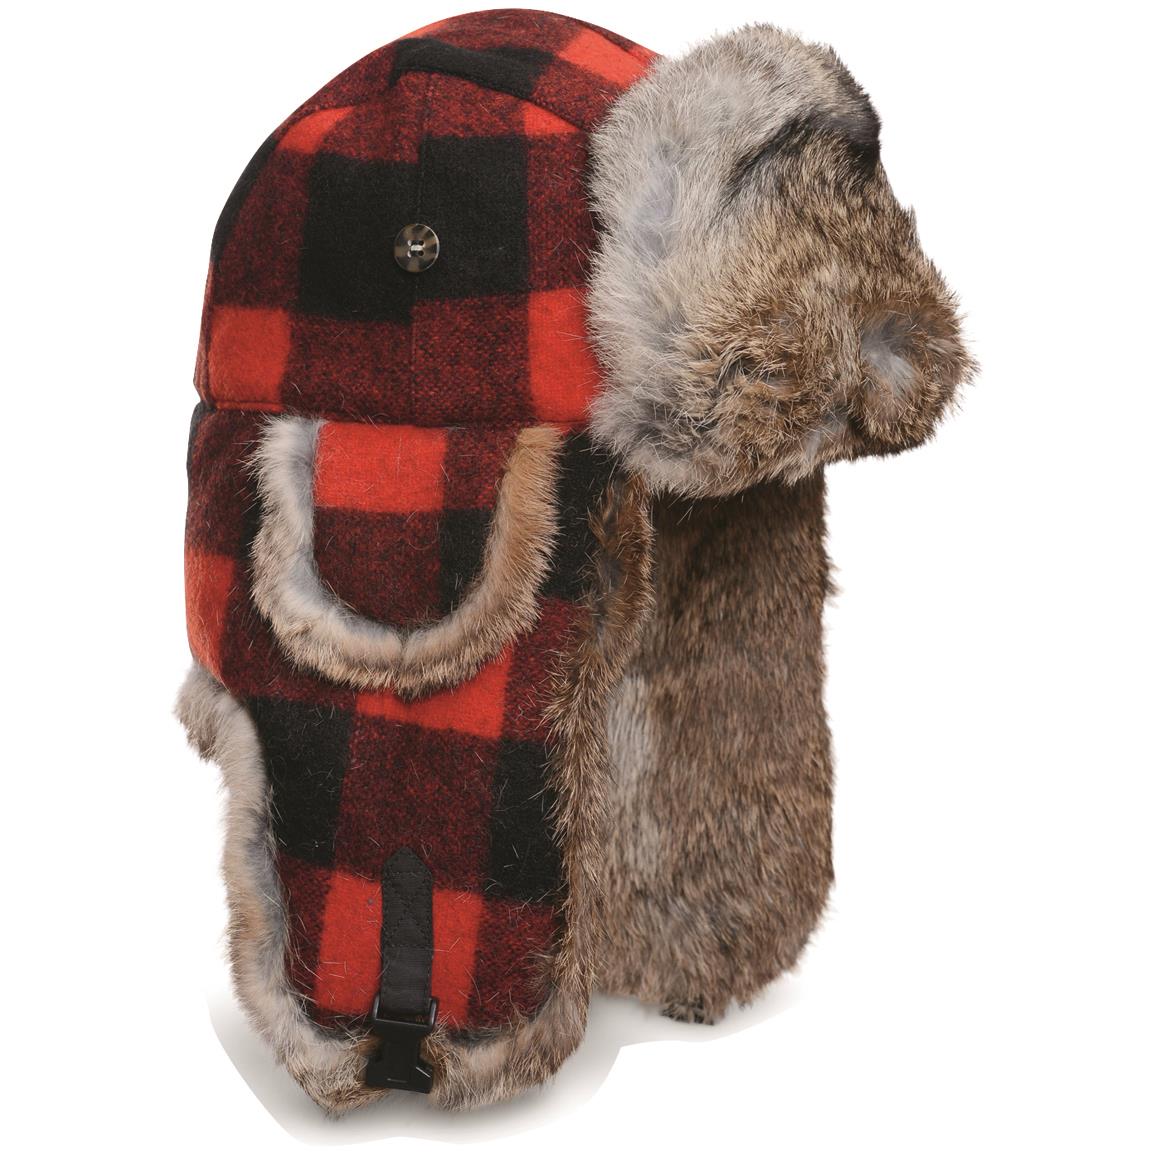 Mad Bomber Wool Rabbit Fur Hat, Red/Black Plaid